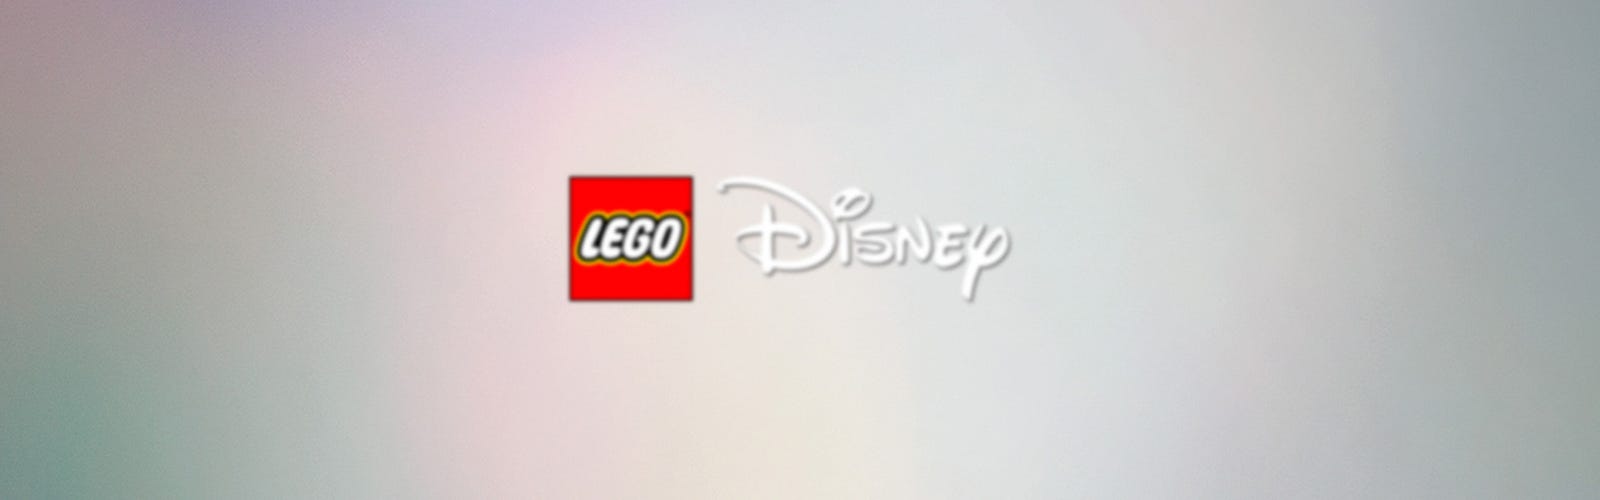 Disney Duos - LEGO — LEGO COLOMBIA